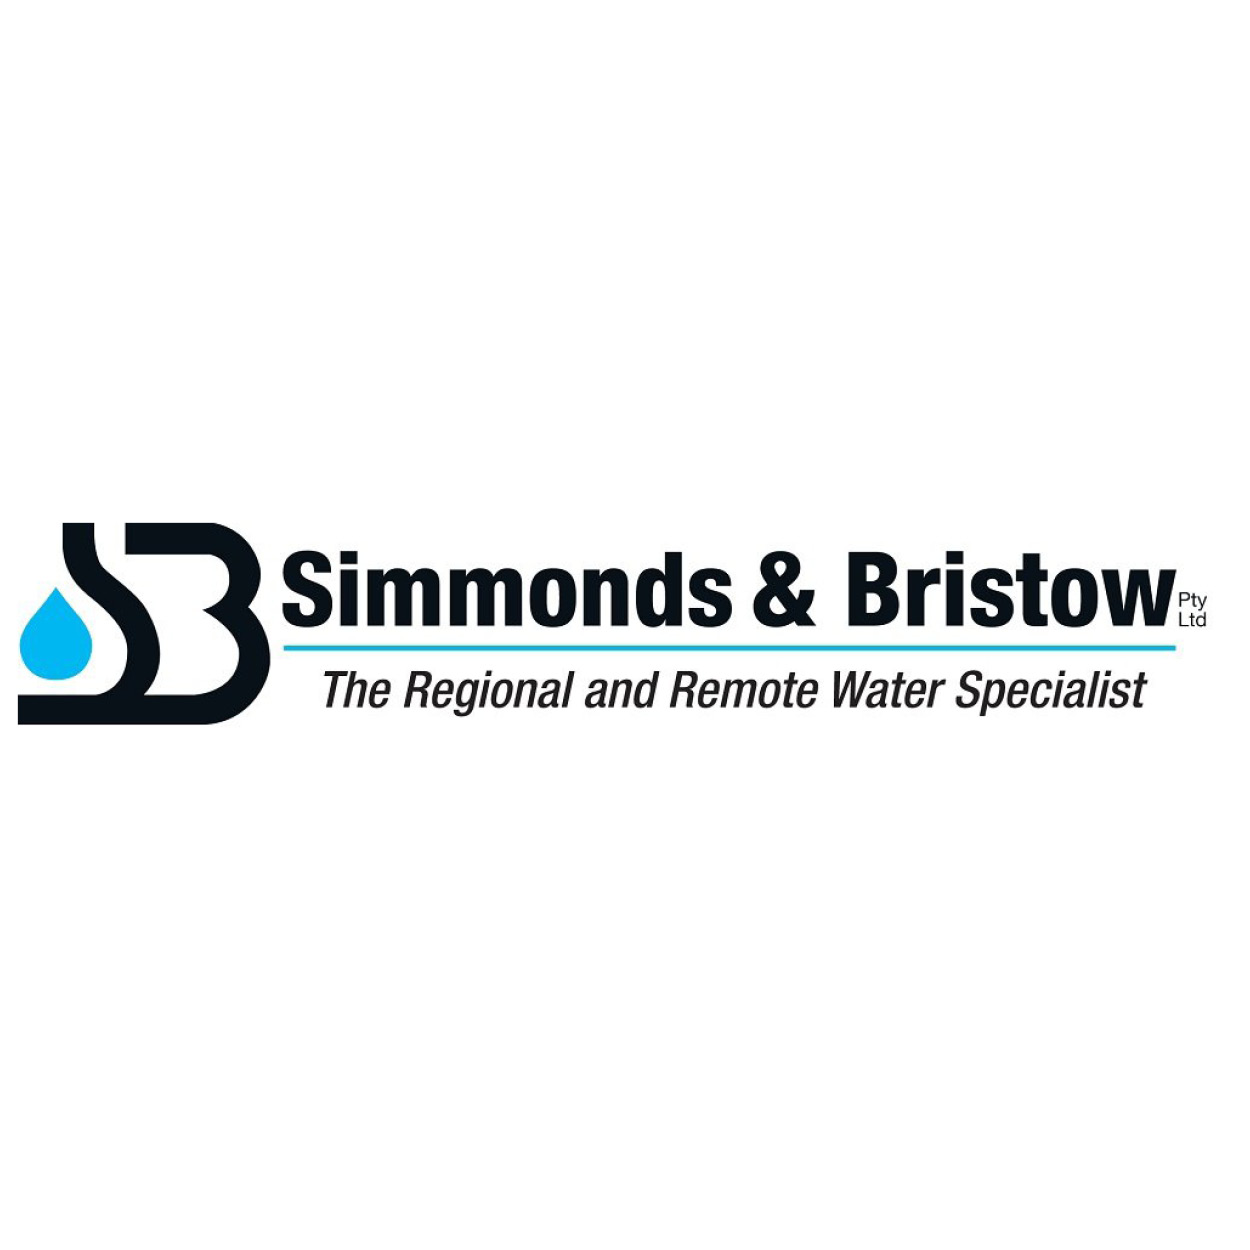 Simmonds & Bristow